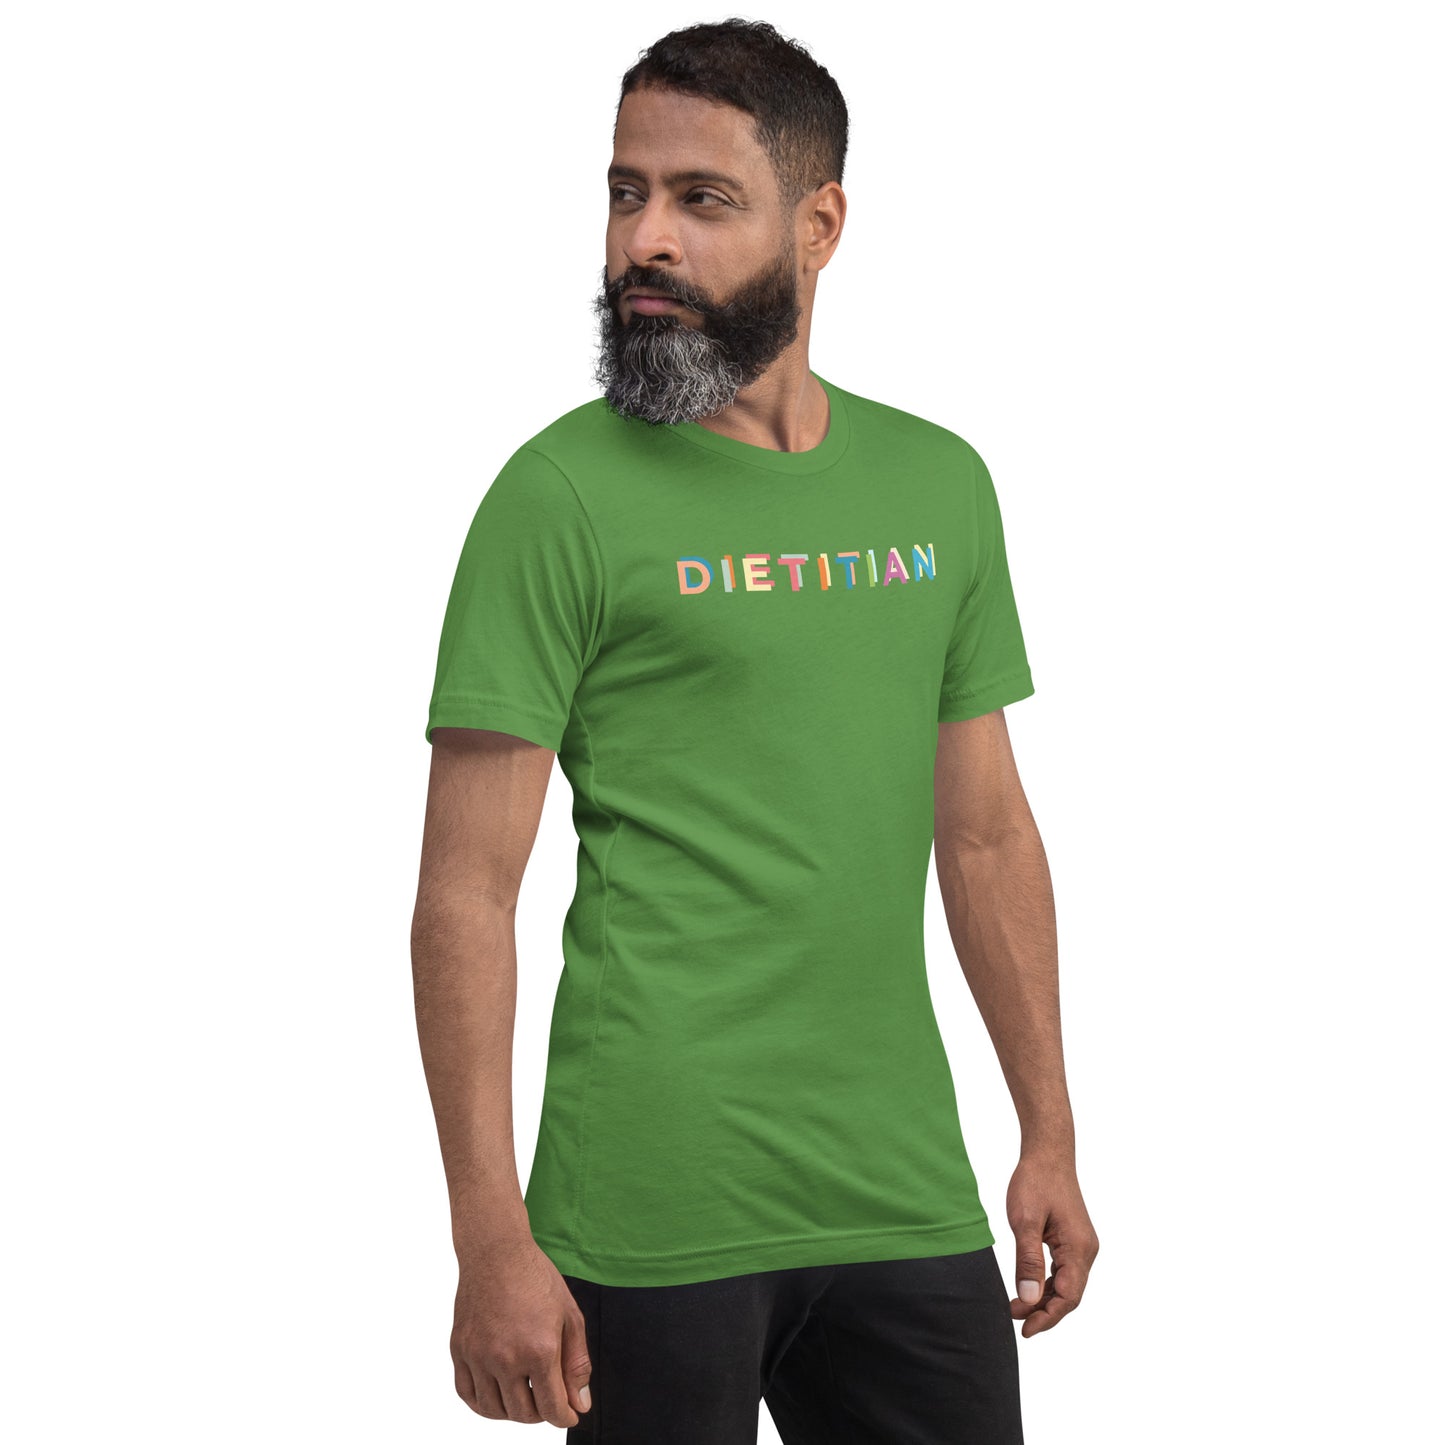 DIETITIAN - Unisex t-shirt